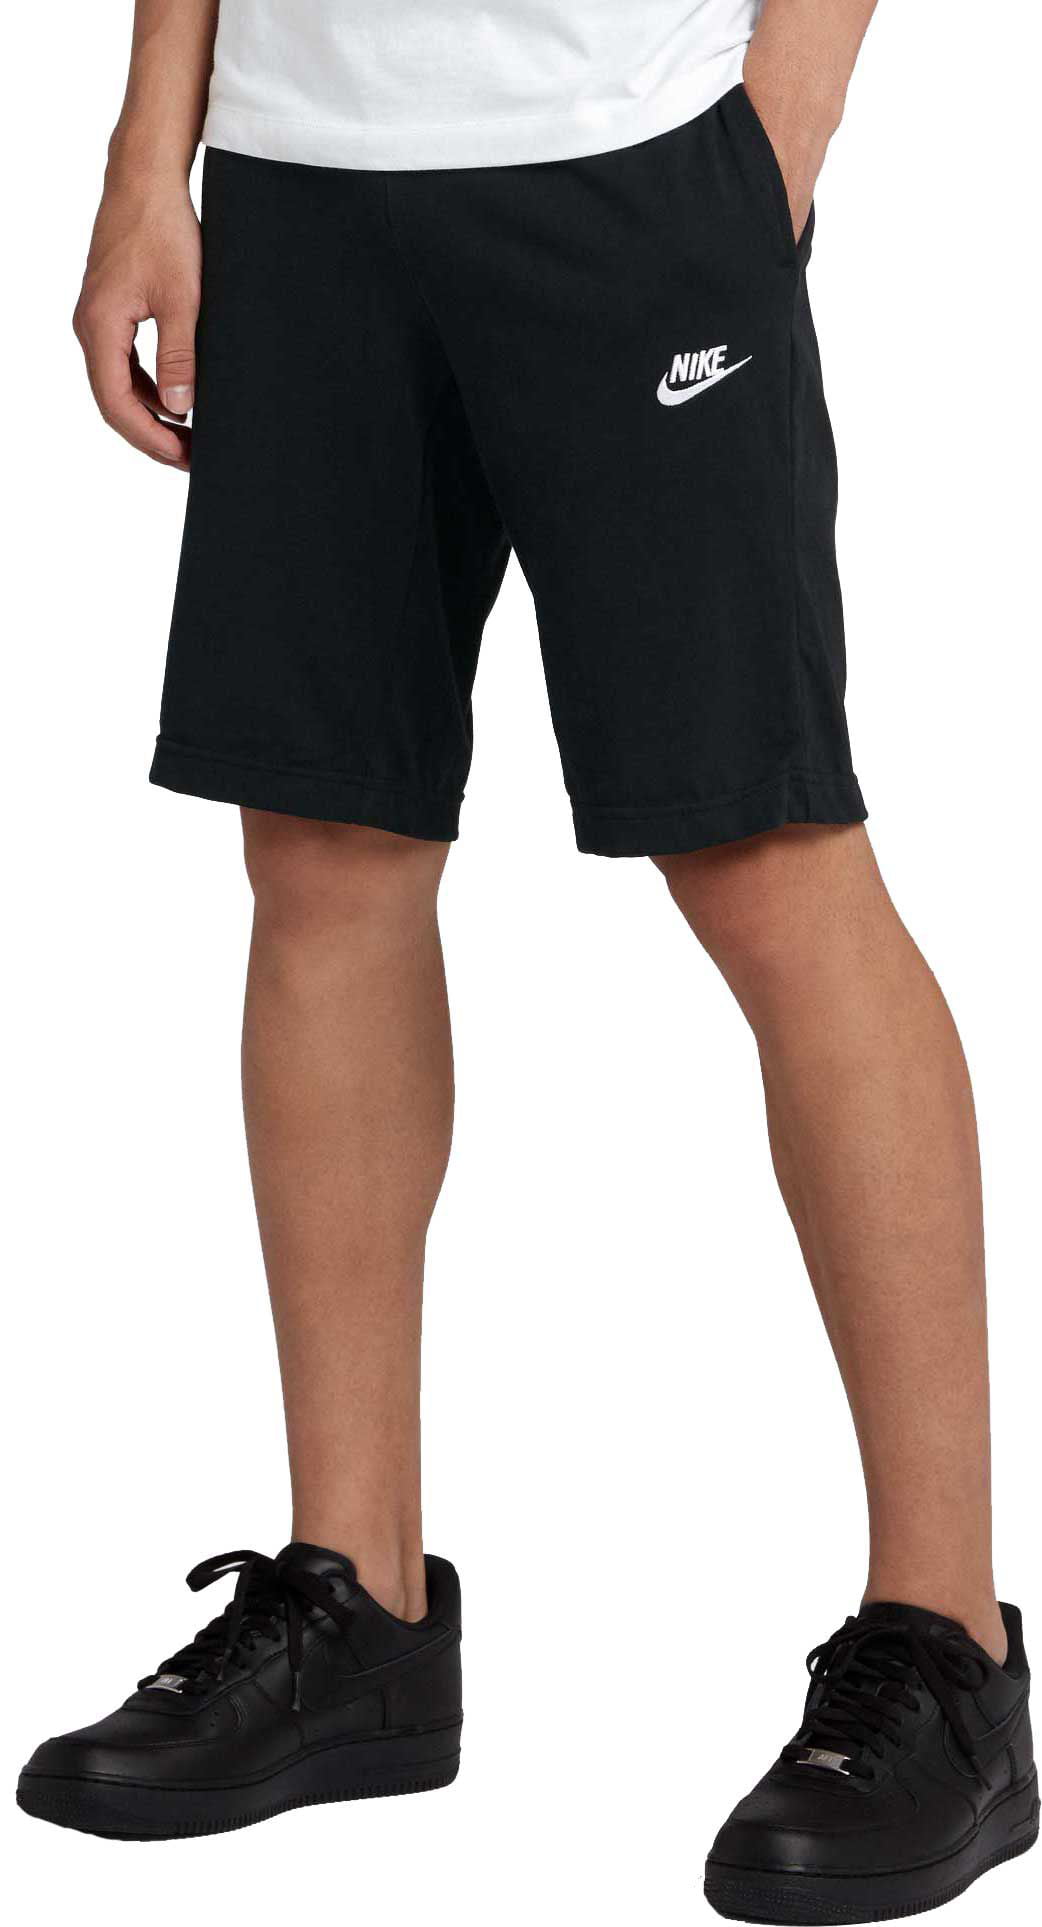 nike men's jersey cotton shorts